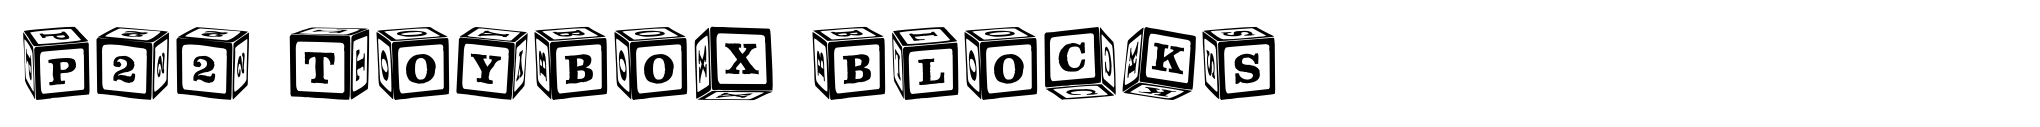 P22 ToyBox Blocks image